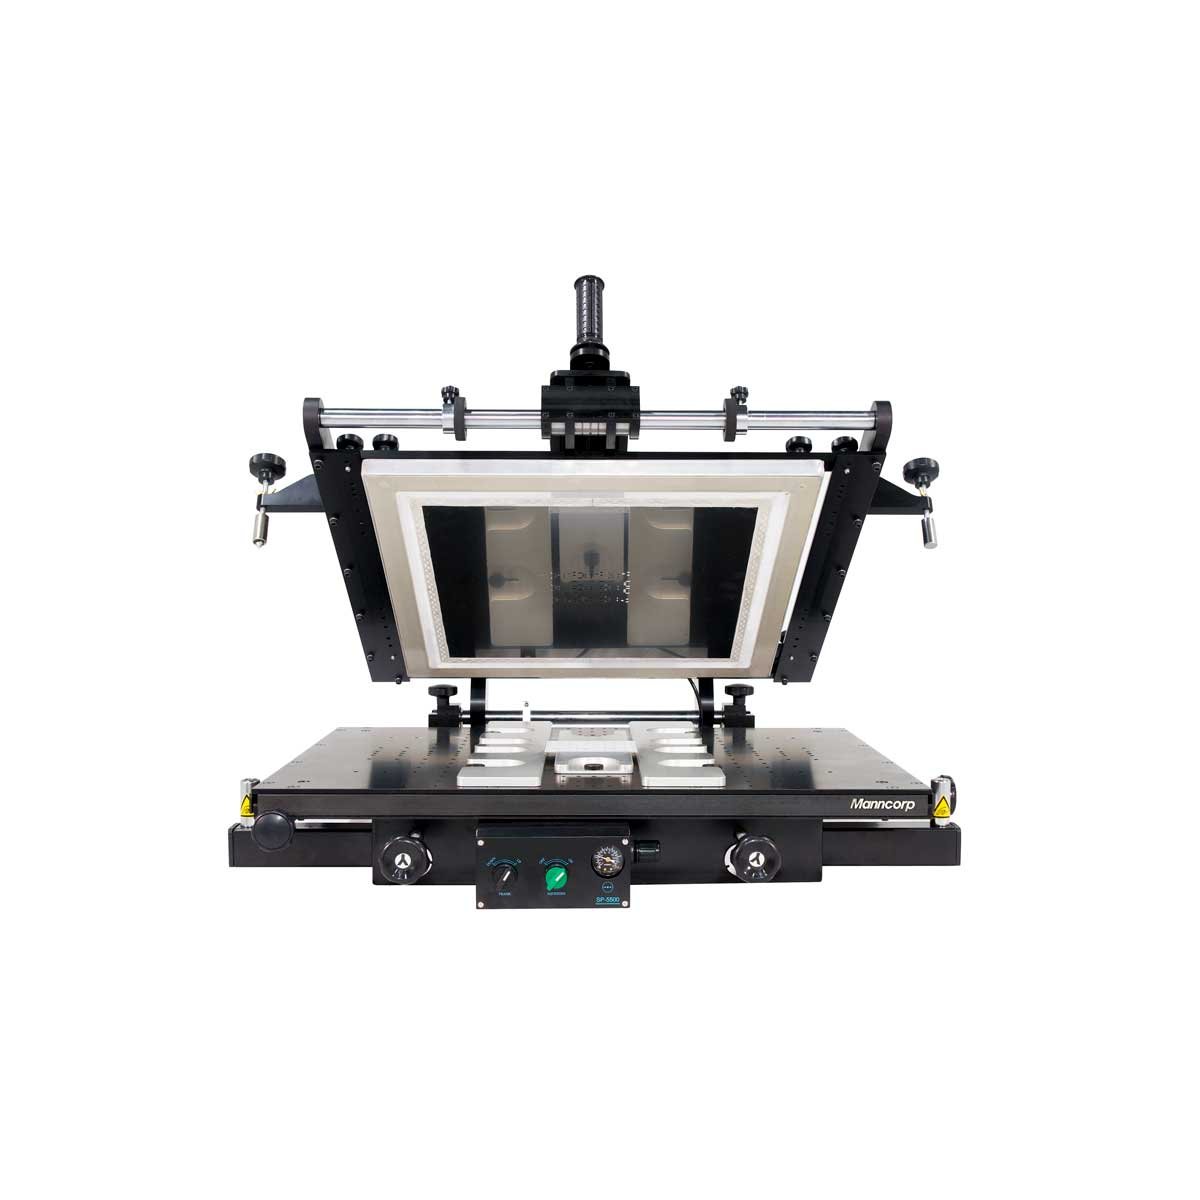 Mantis 23 Fully Automatic Stencil Printer - Reprint Services